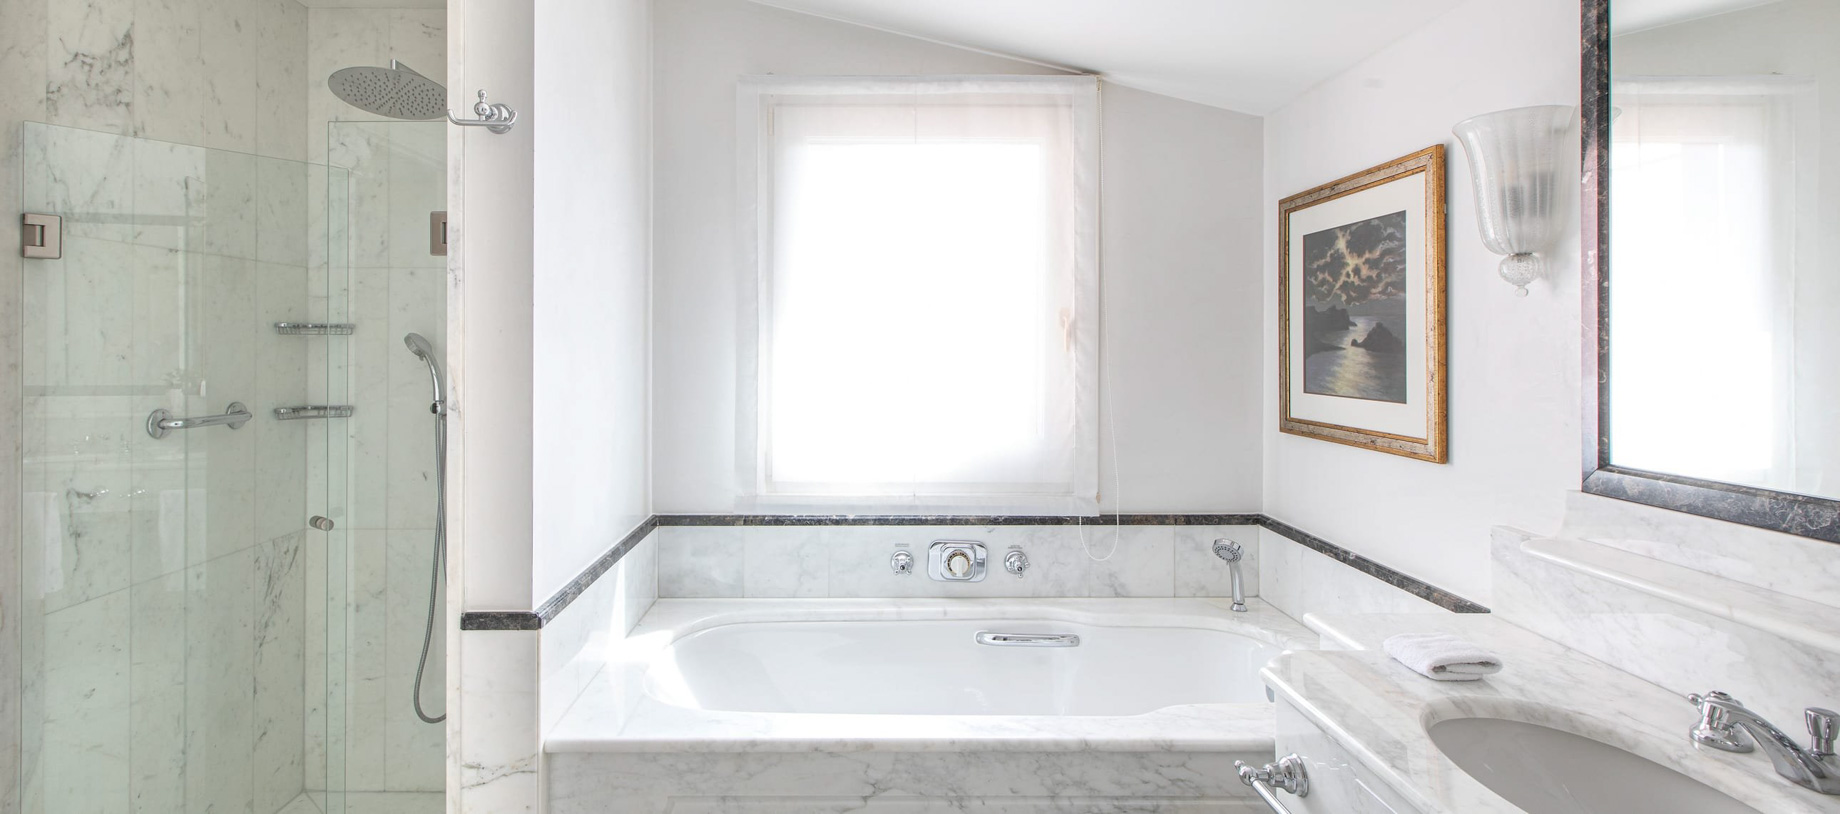 142 – Grand Hotel Timeo, A Belmond Hotel – Taormina, Italy – Bathroom